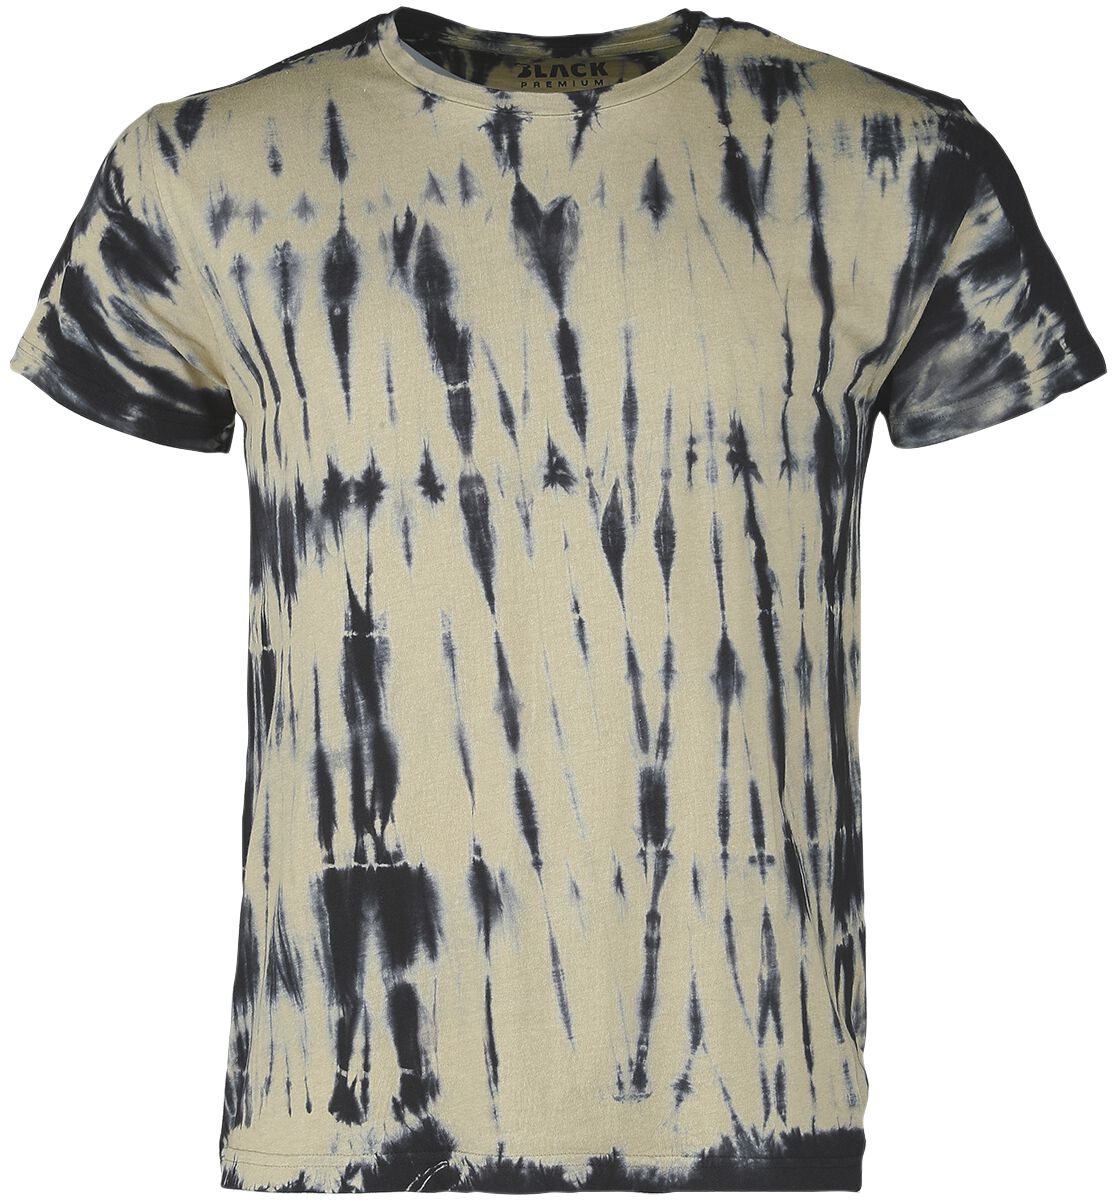 Image of T-Shirt di Black Premium by EMP - Tie-dye t-shirt - S a XXL - Uomo - sabbia